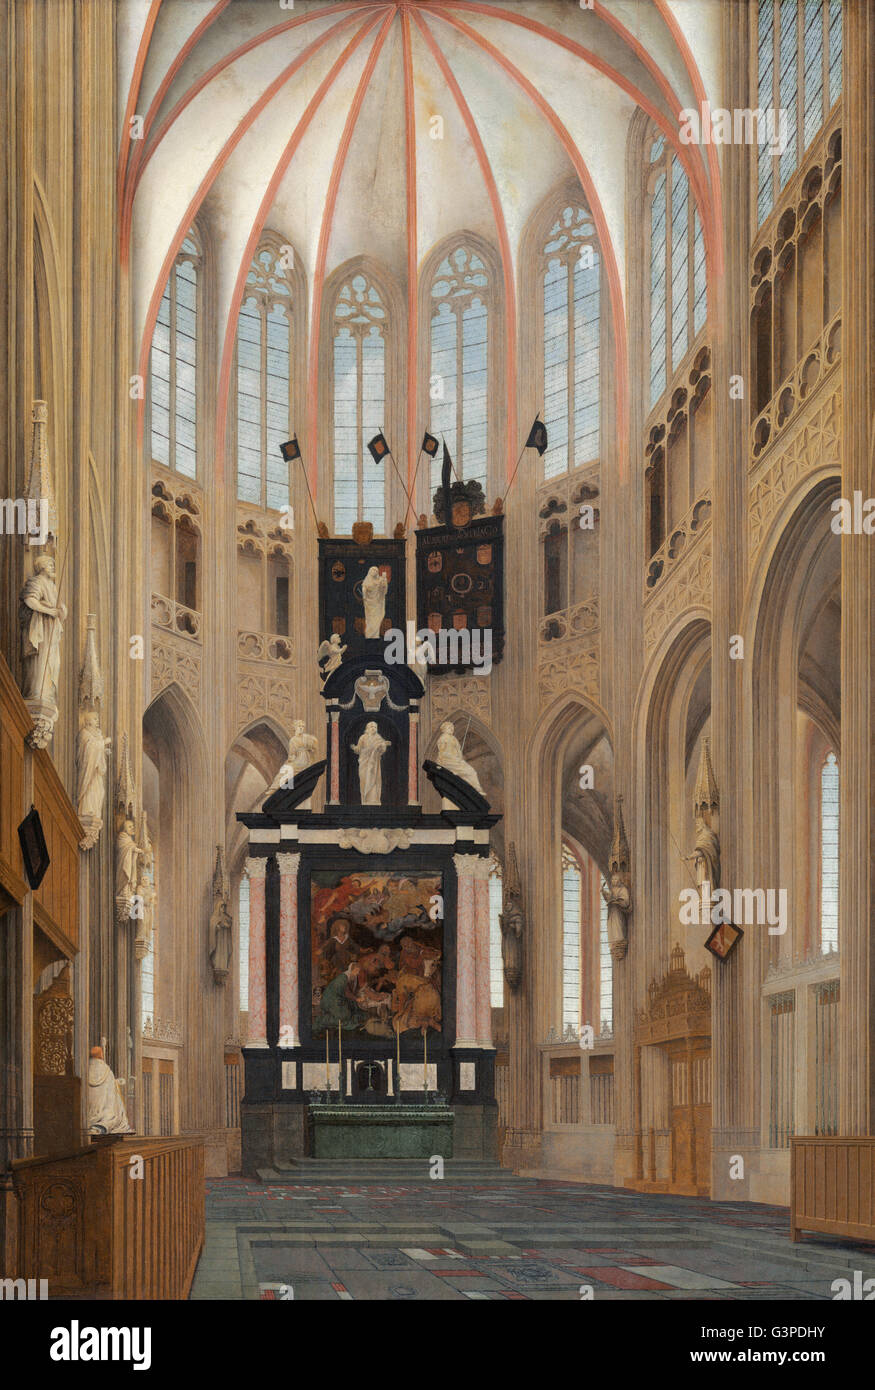 Pieter Jansz Saenredam - Cathedral of Saint John at 's-Hertogenbosch - National Gallery of Art, Washington DC Stock Photo